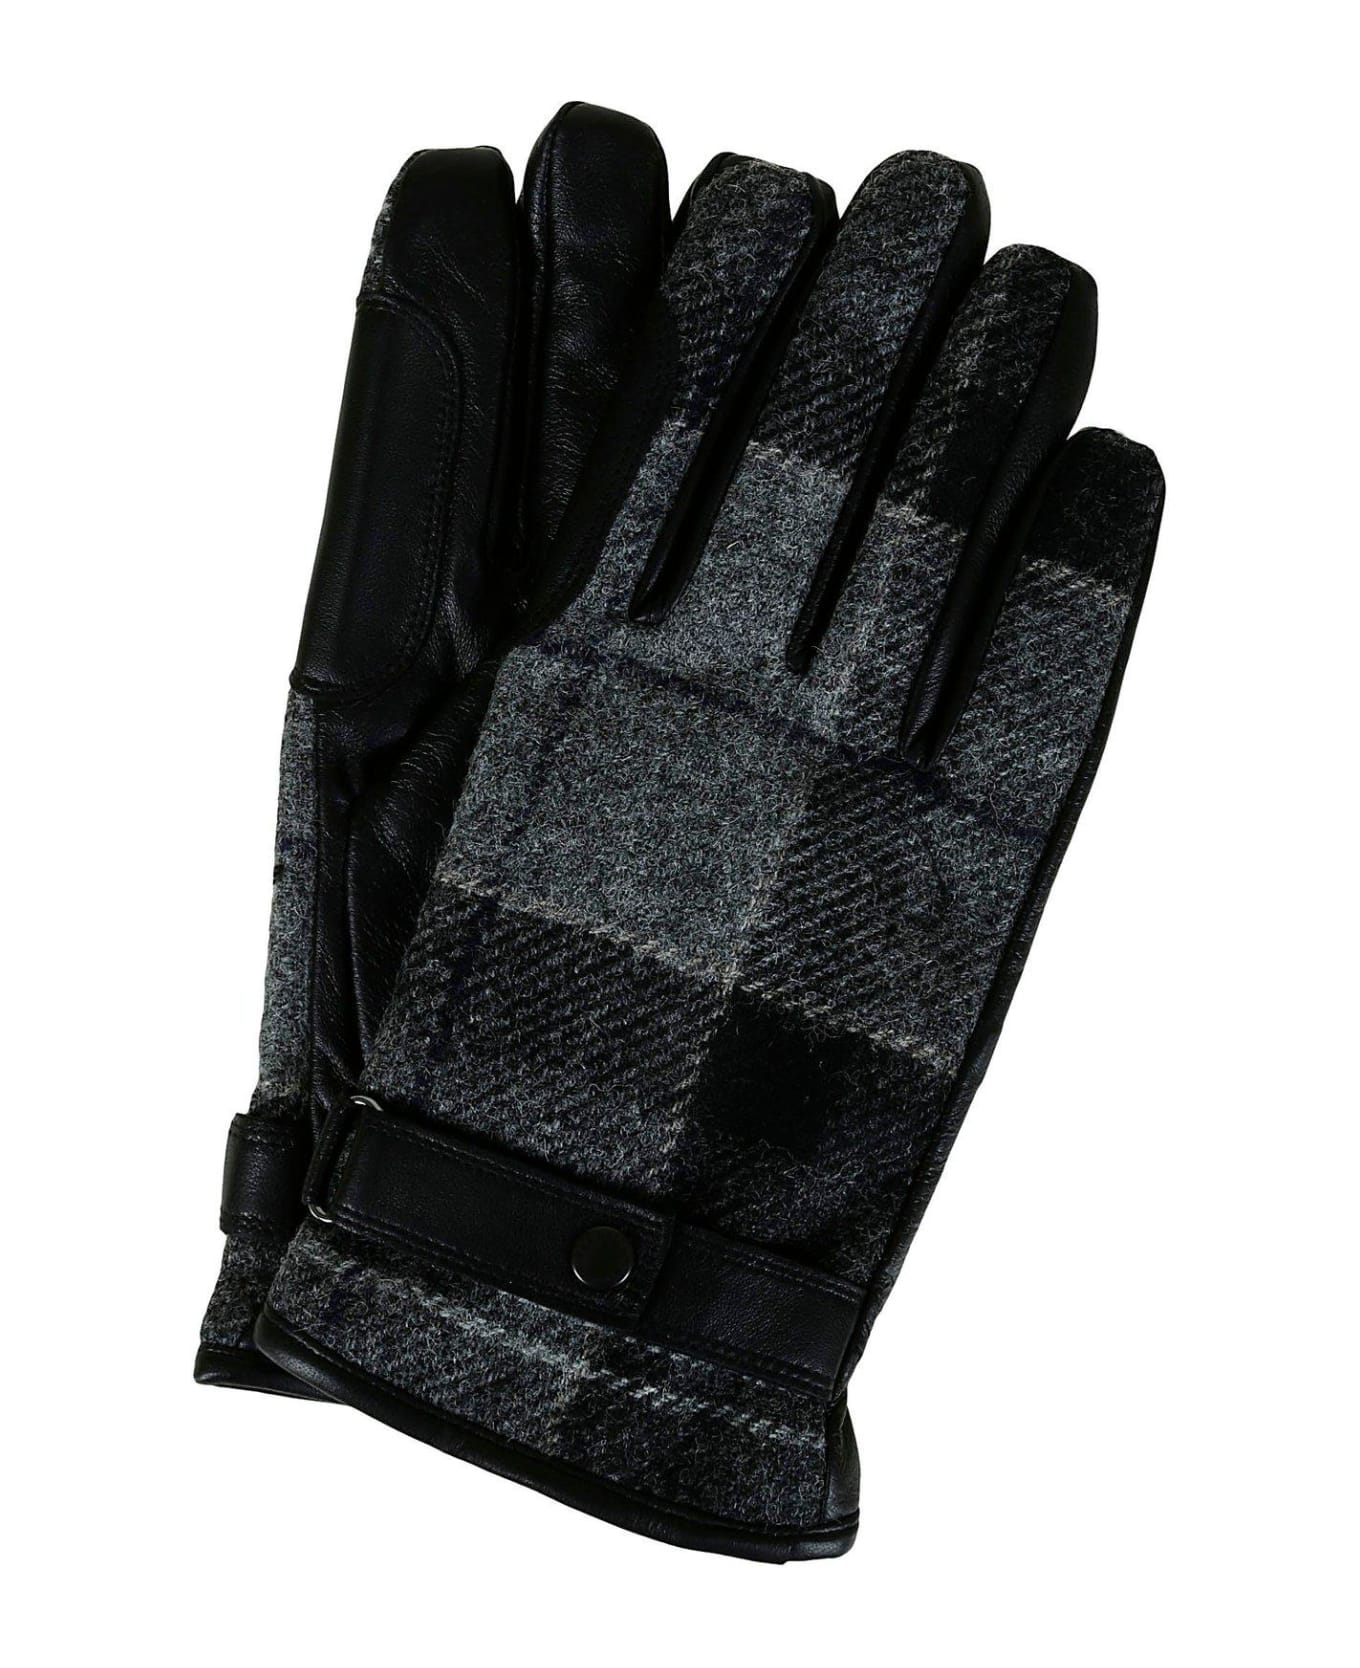 Barbour Black And Grey Tartan Wool Gloves - Black/grey